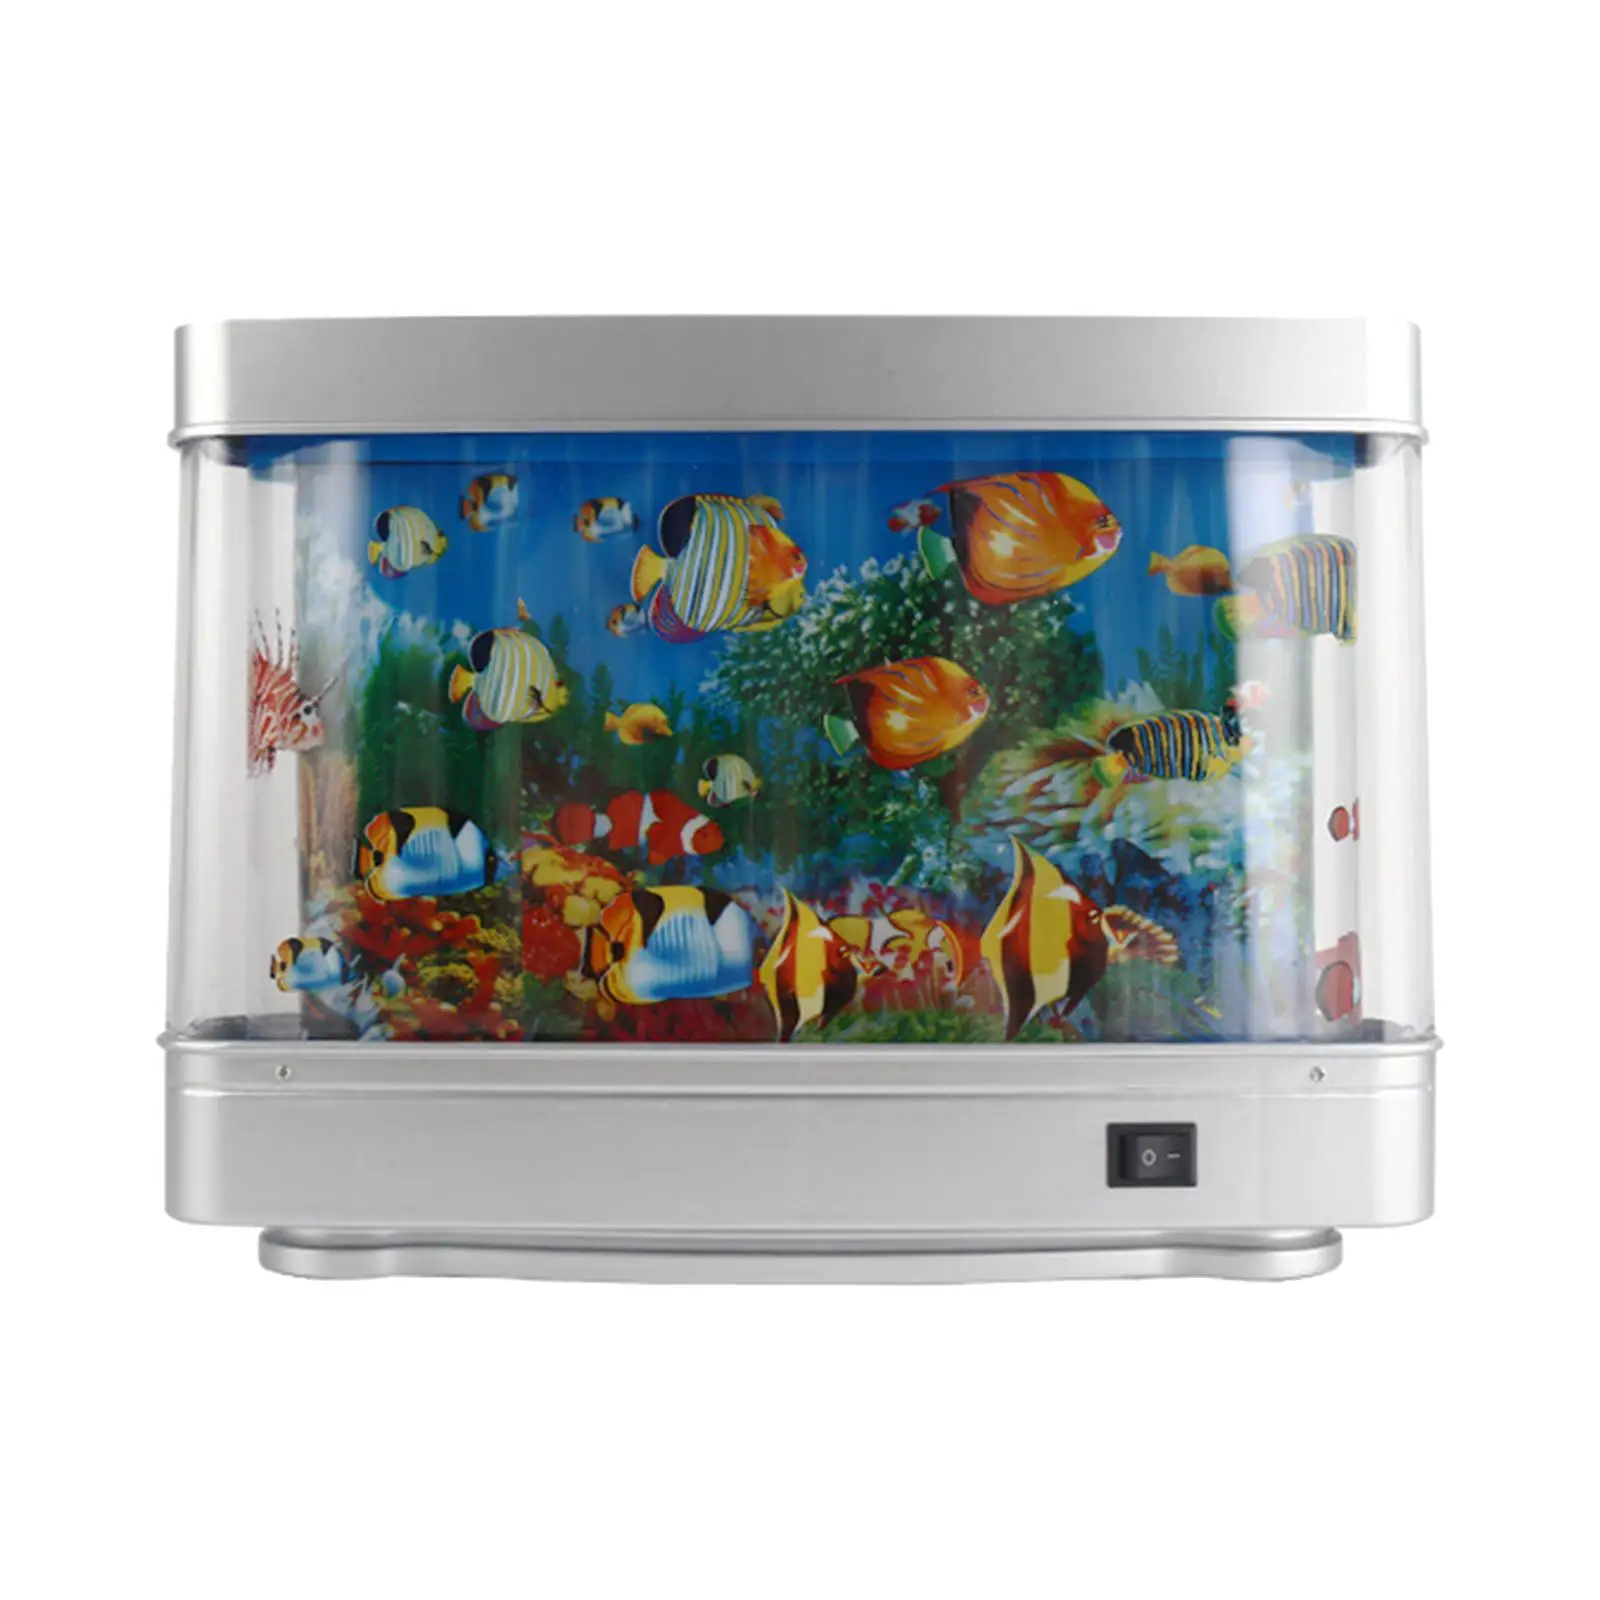 Aquarium Mood Lamp Marine Moving Background Underwater World Tropical Fish Night Light for Birthday Party Holiday Kids Room